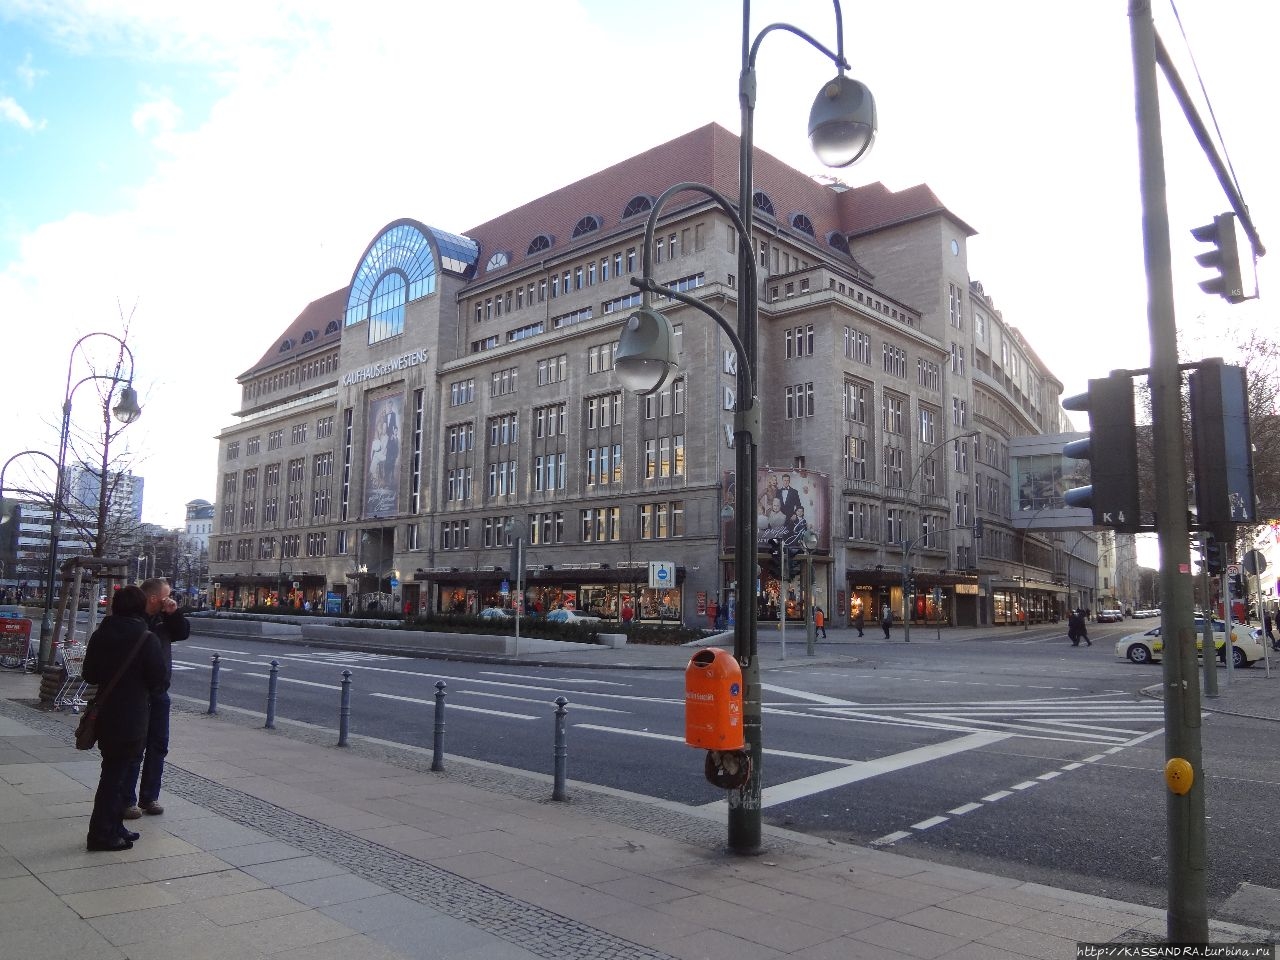 Торговый центр KaDeWe / Kaufhaus des Westens (KaDeWe)